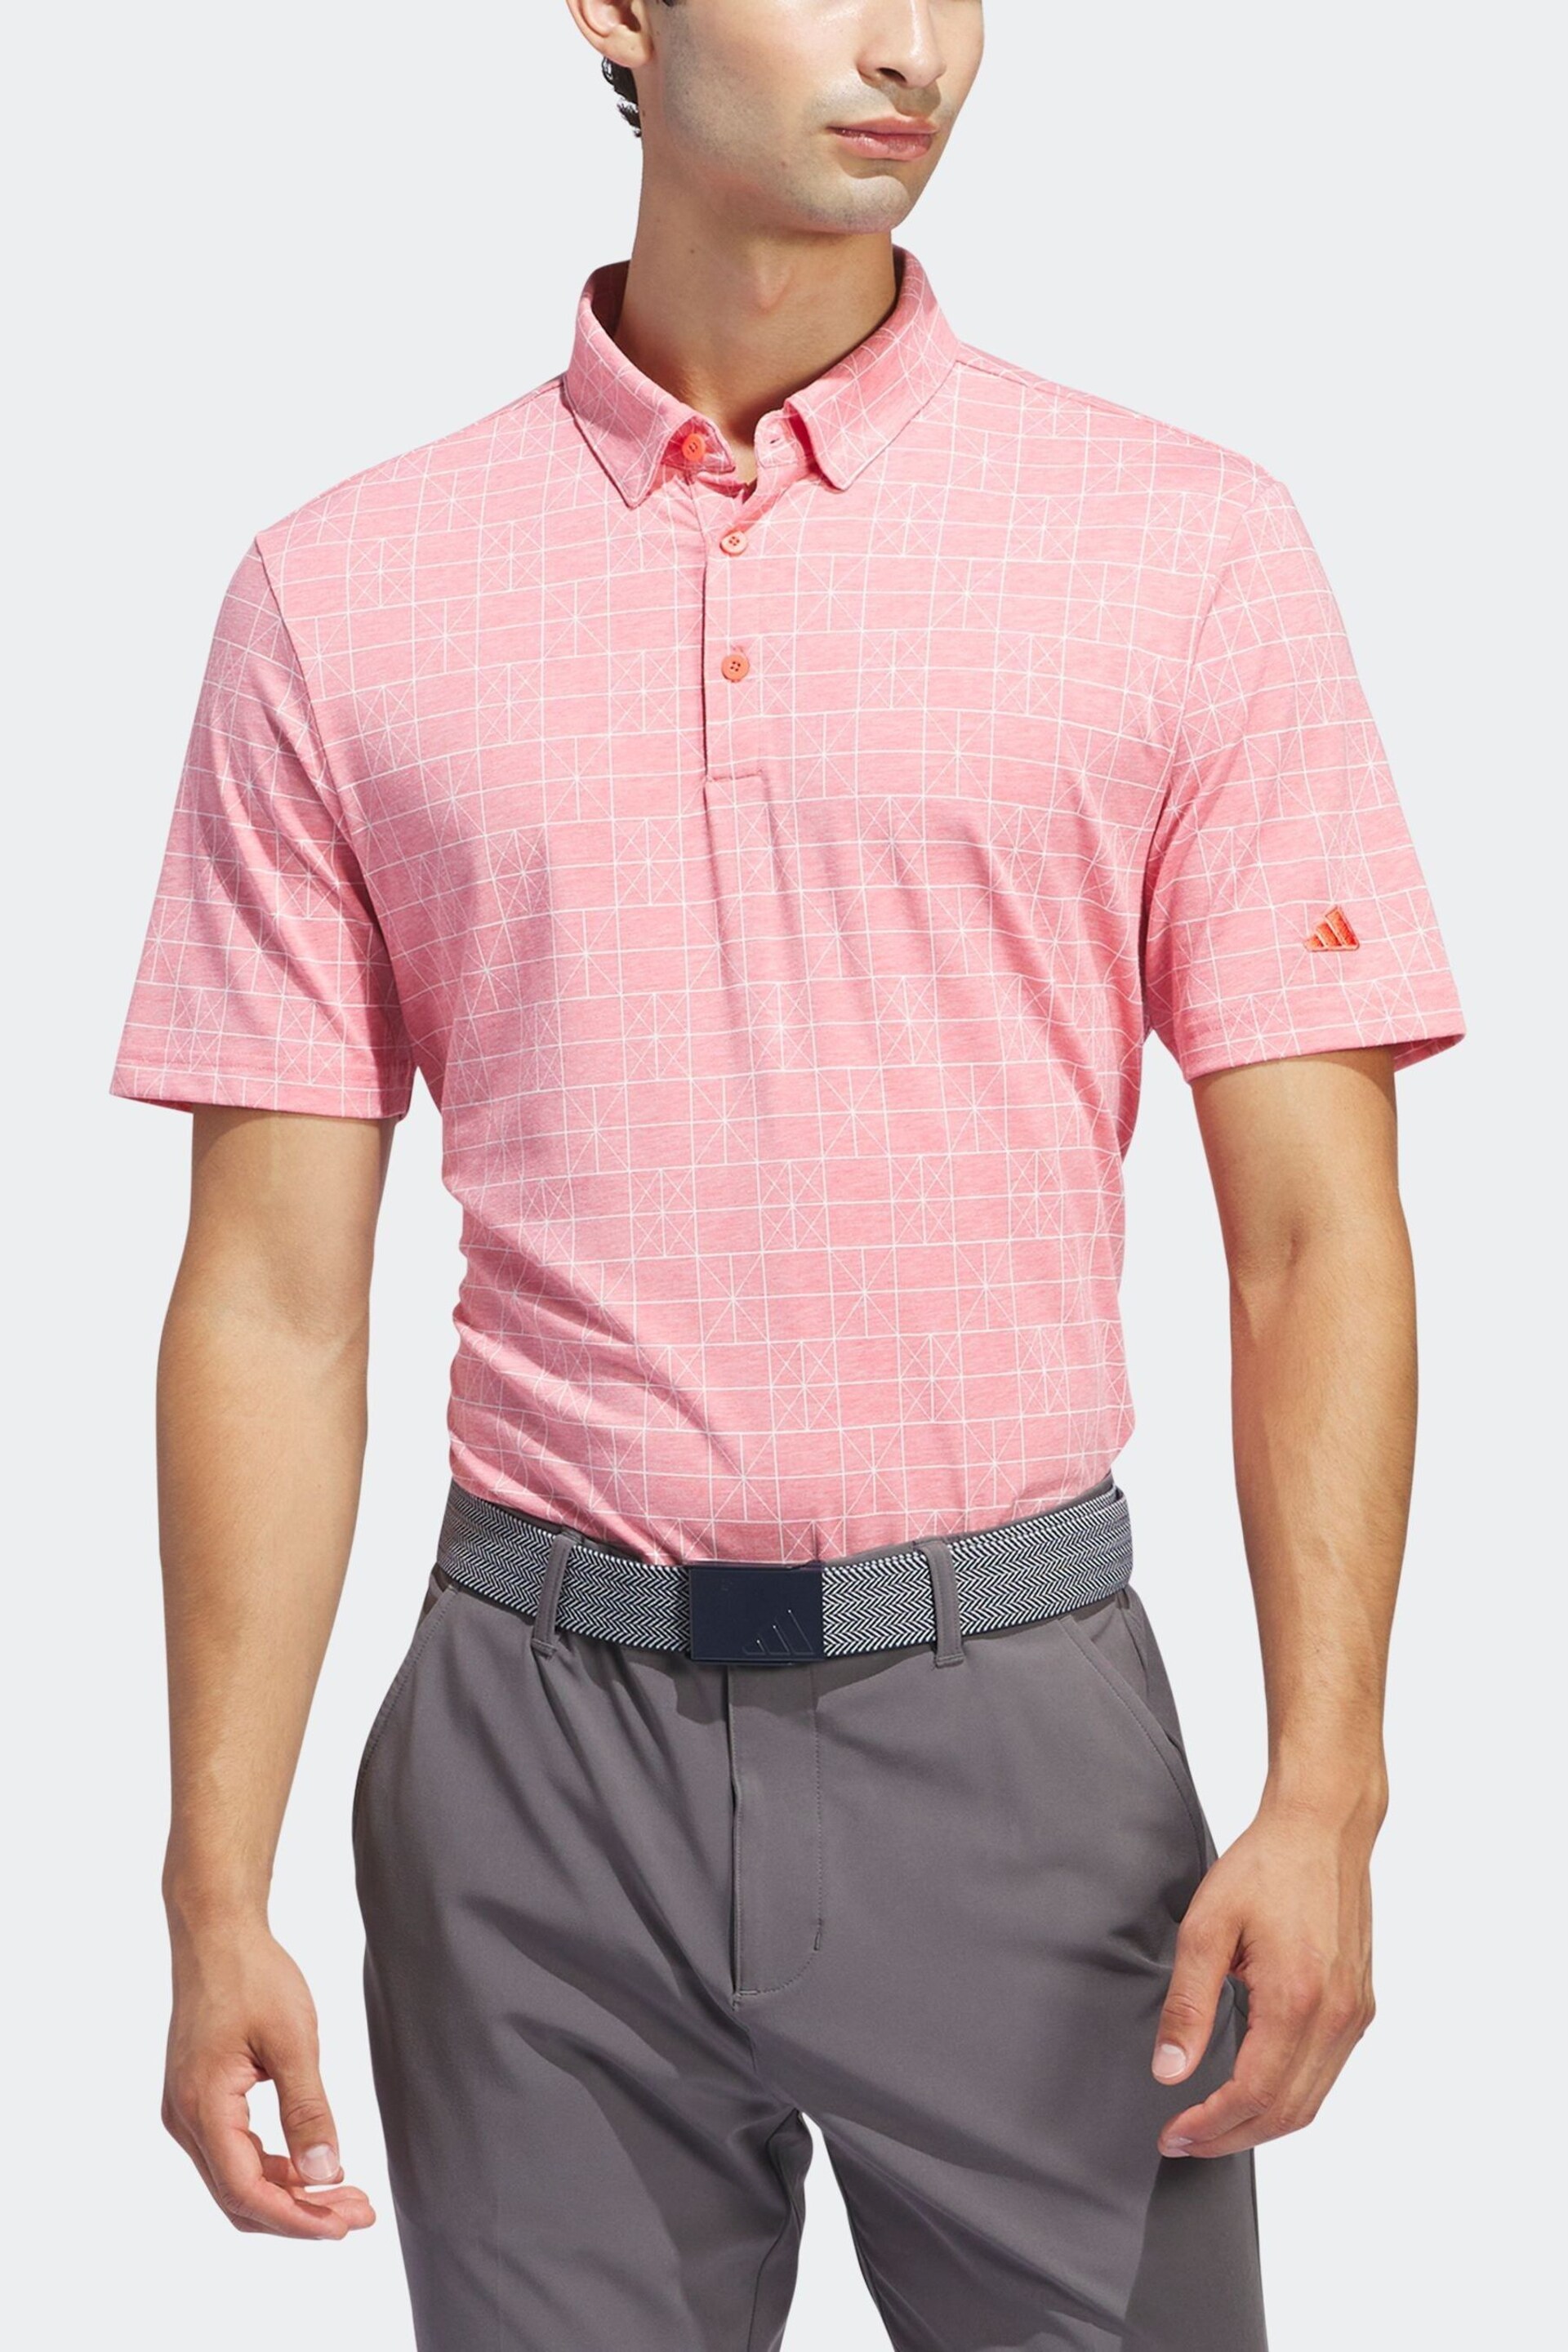 adidas Golf Go To Novelty Polo Shirt - Image 3 of 7